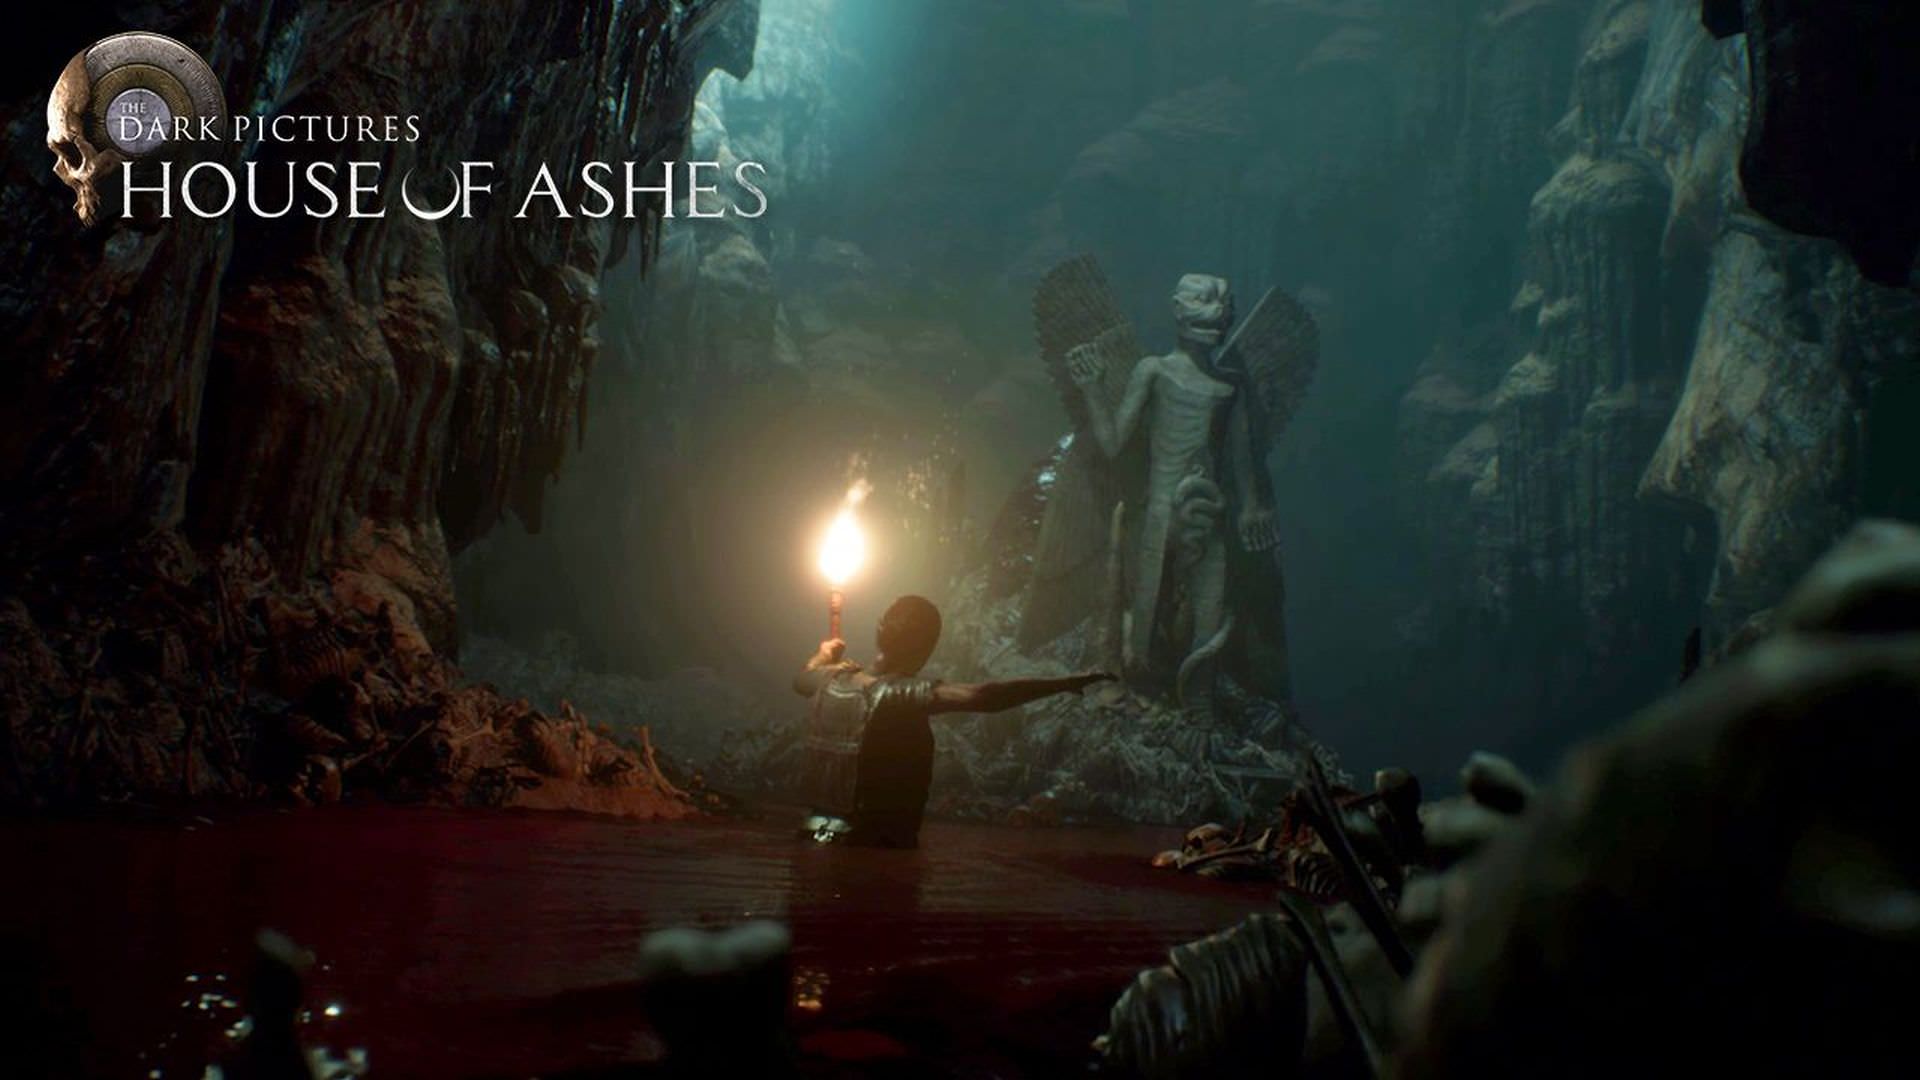 سرباز گرفتار در آب در بازی The Dark Pictures Anthology: House of Ashes